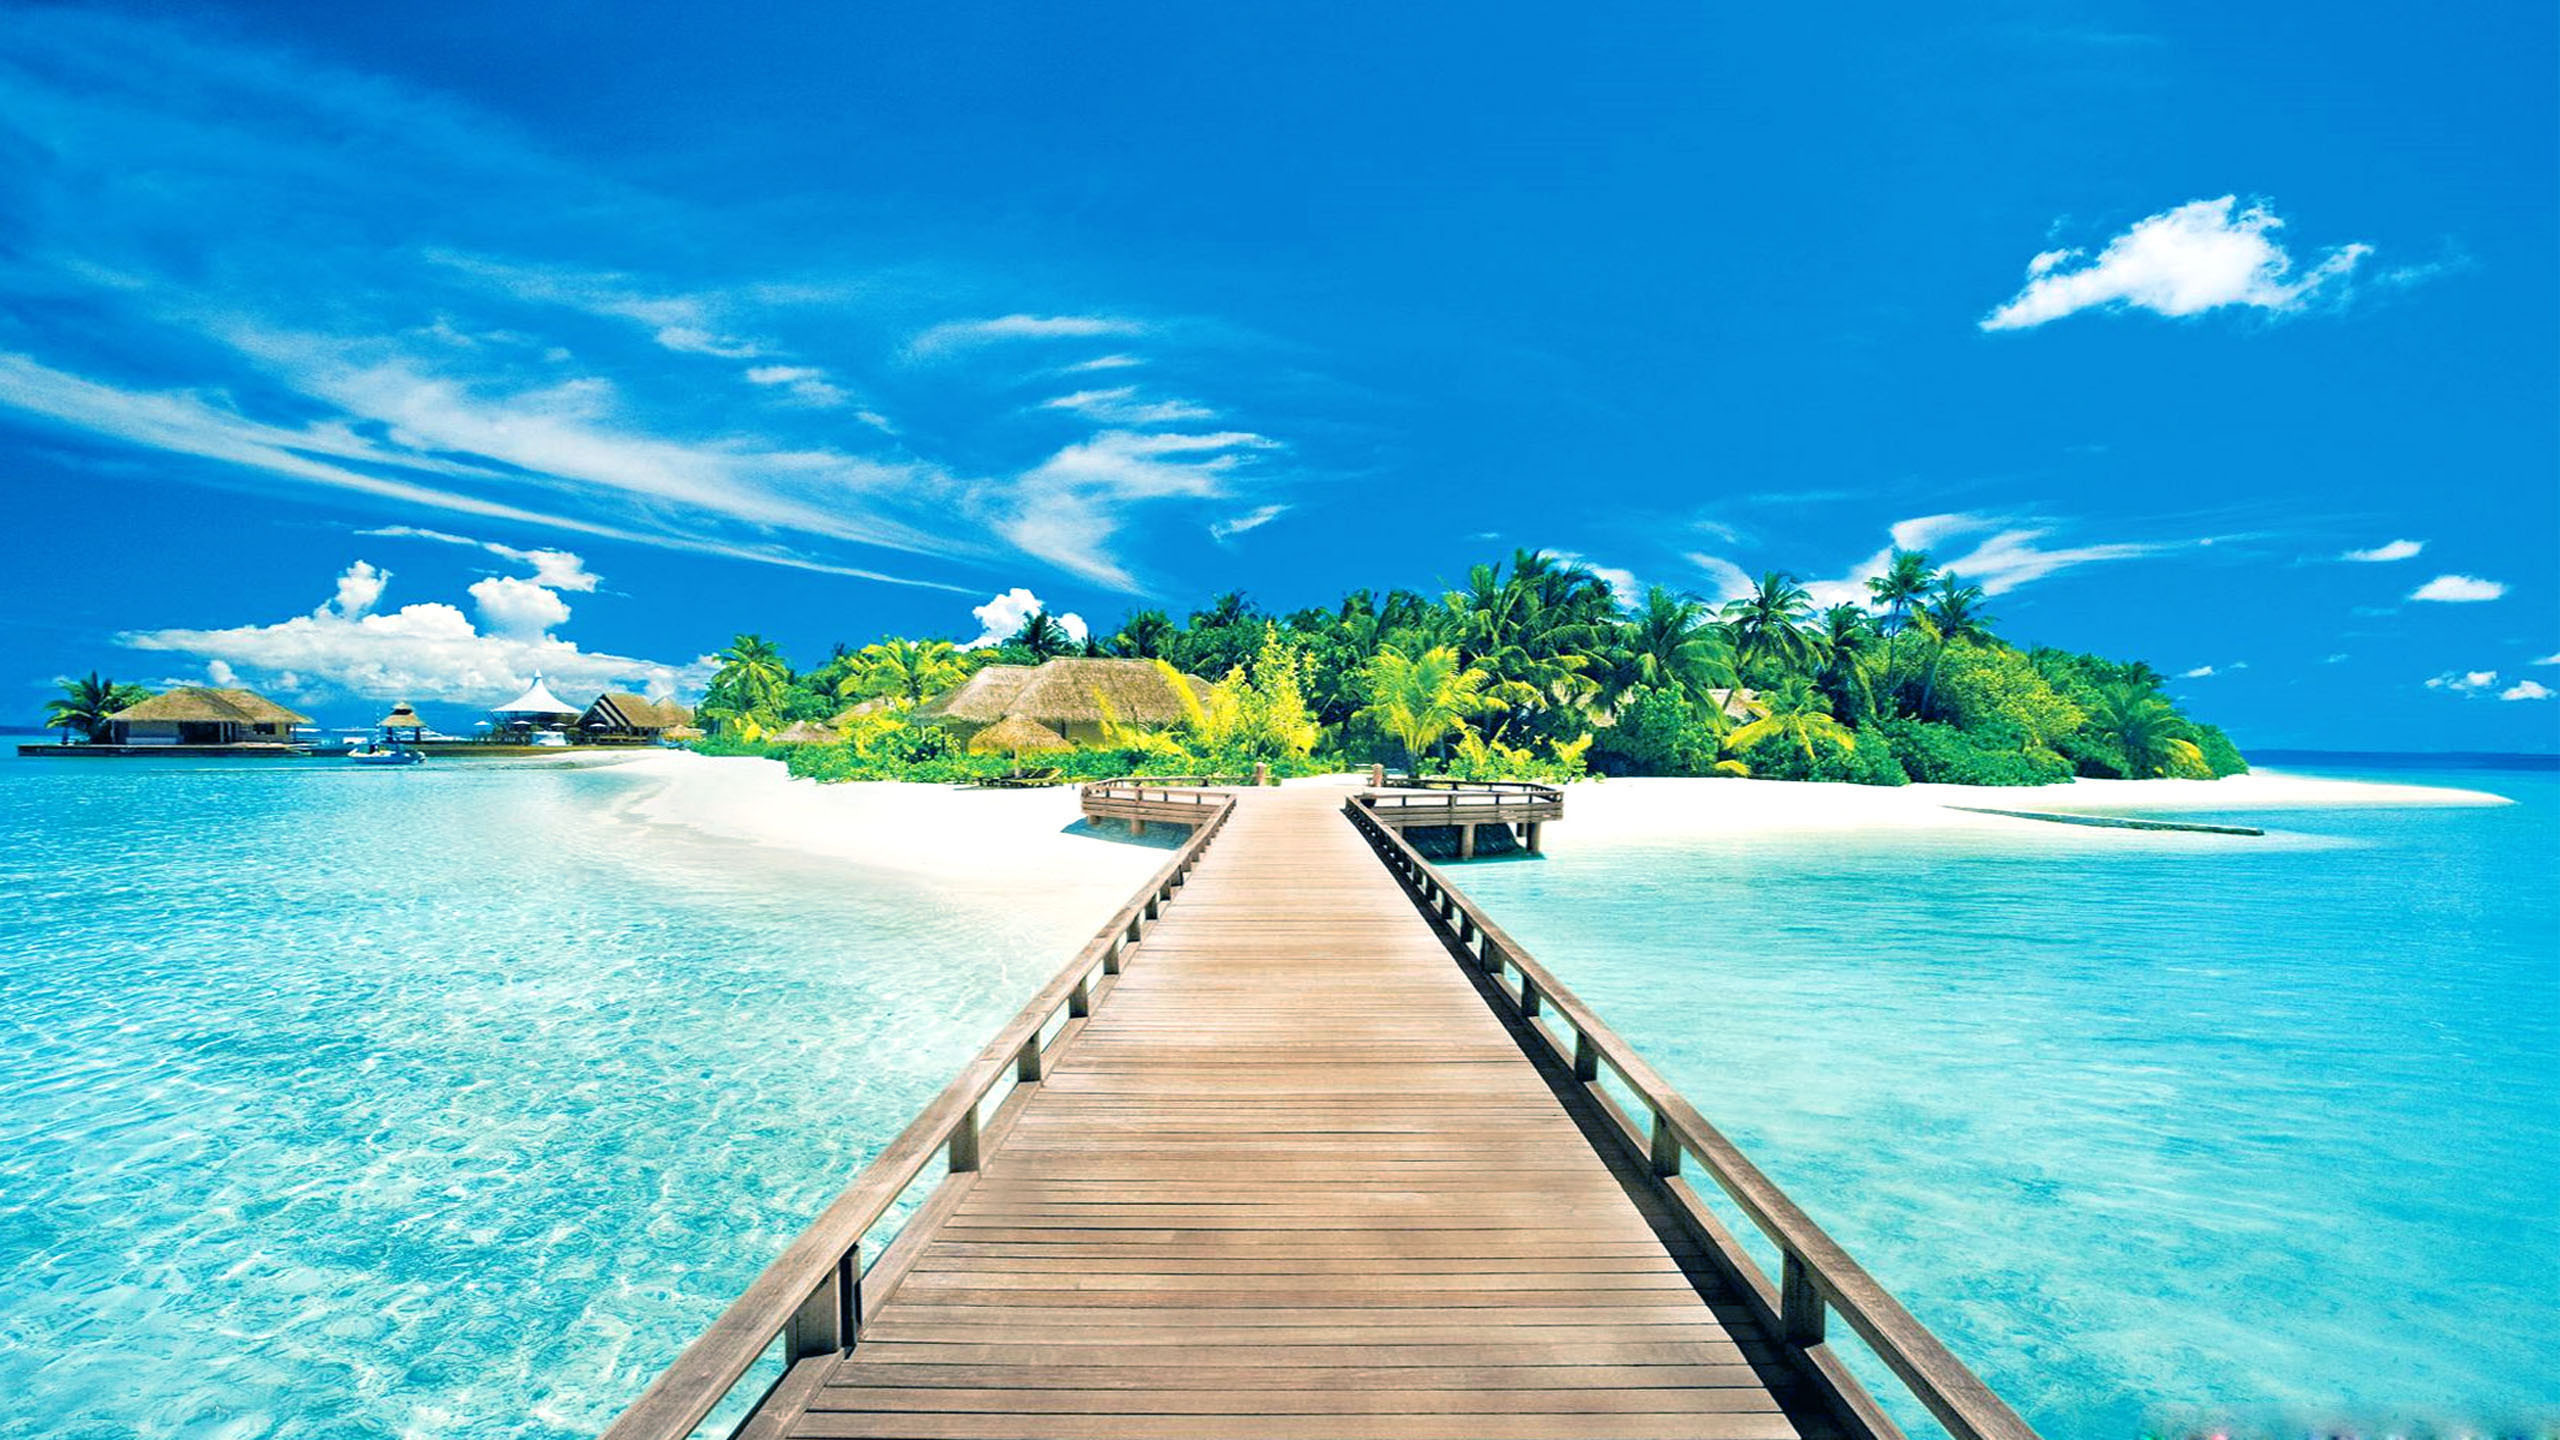 2560x1440 Explore Exotic Beaches, Tropical Beaches, and more!